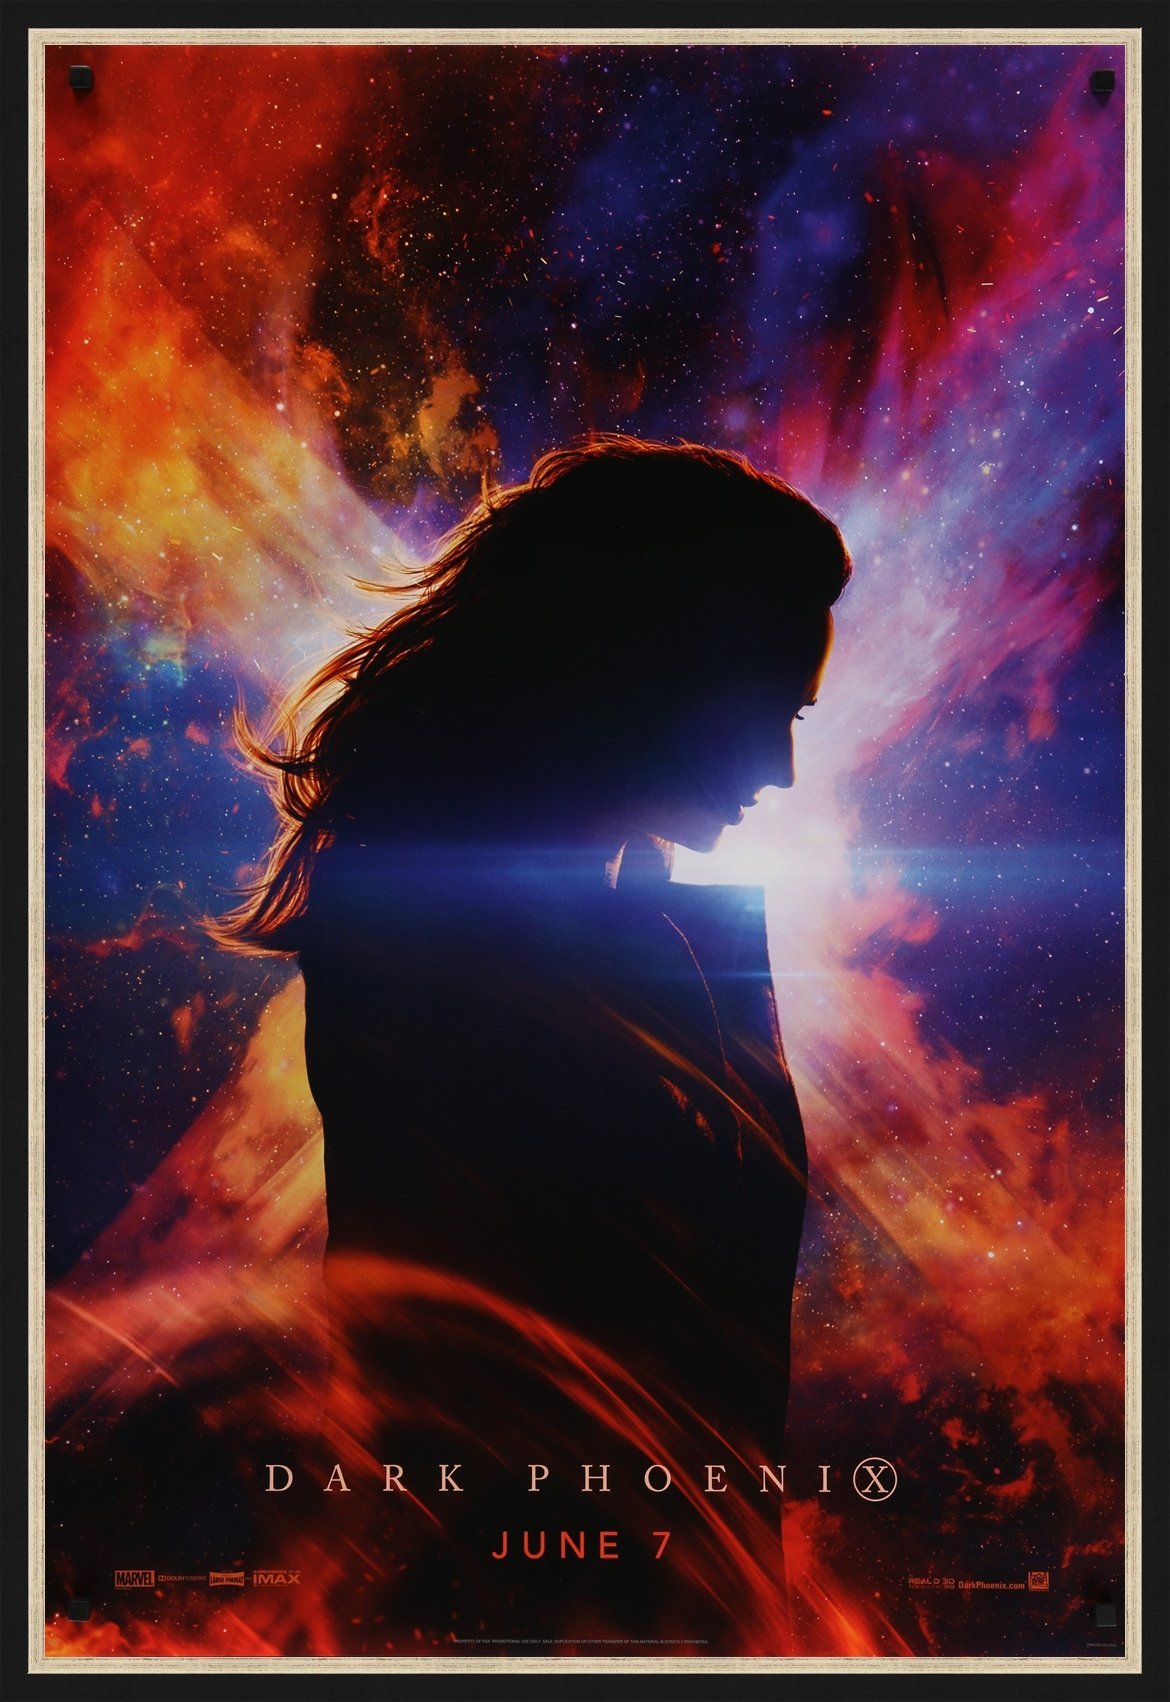 An original movie poster for the Marvel film Dark Phoenix